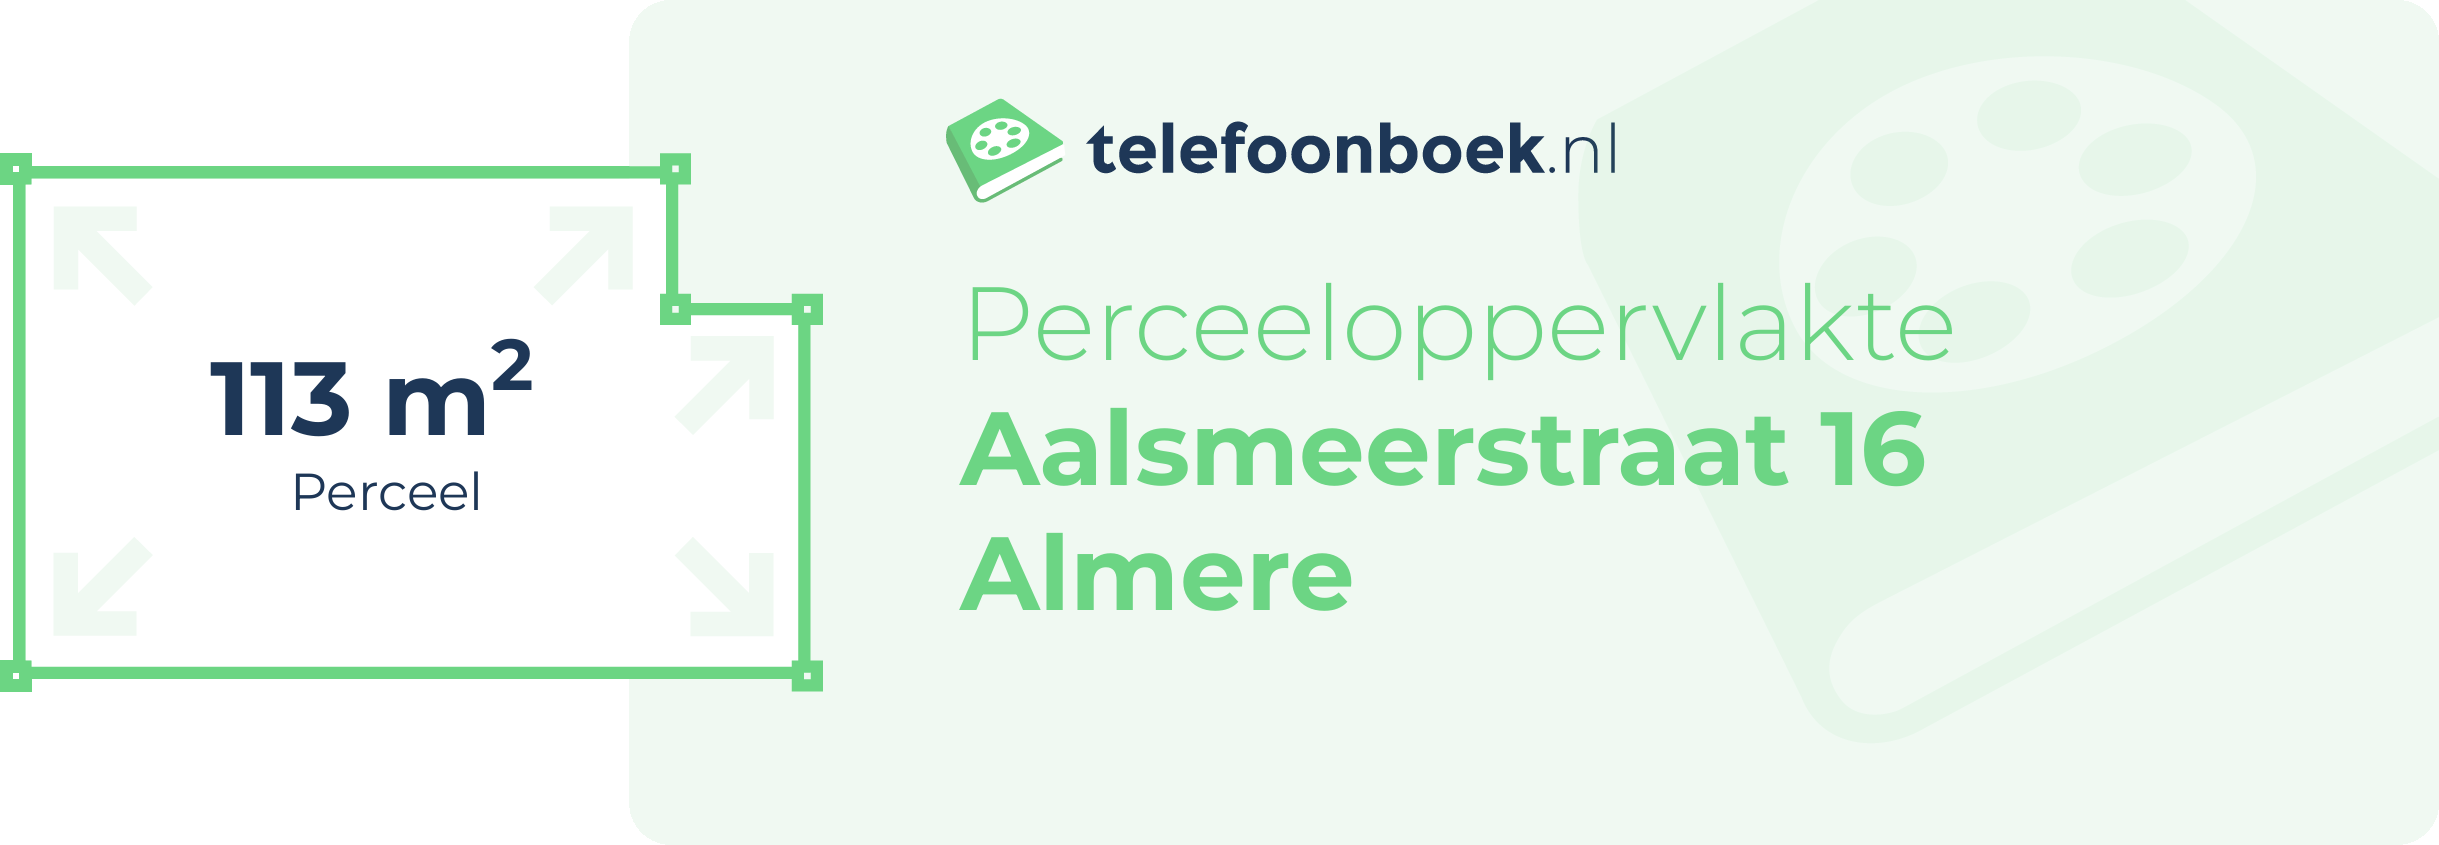 Perceeloppervlakte Aalsmeerstraat 16 Almere